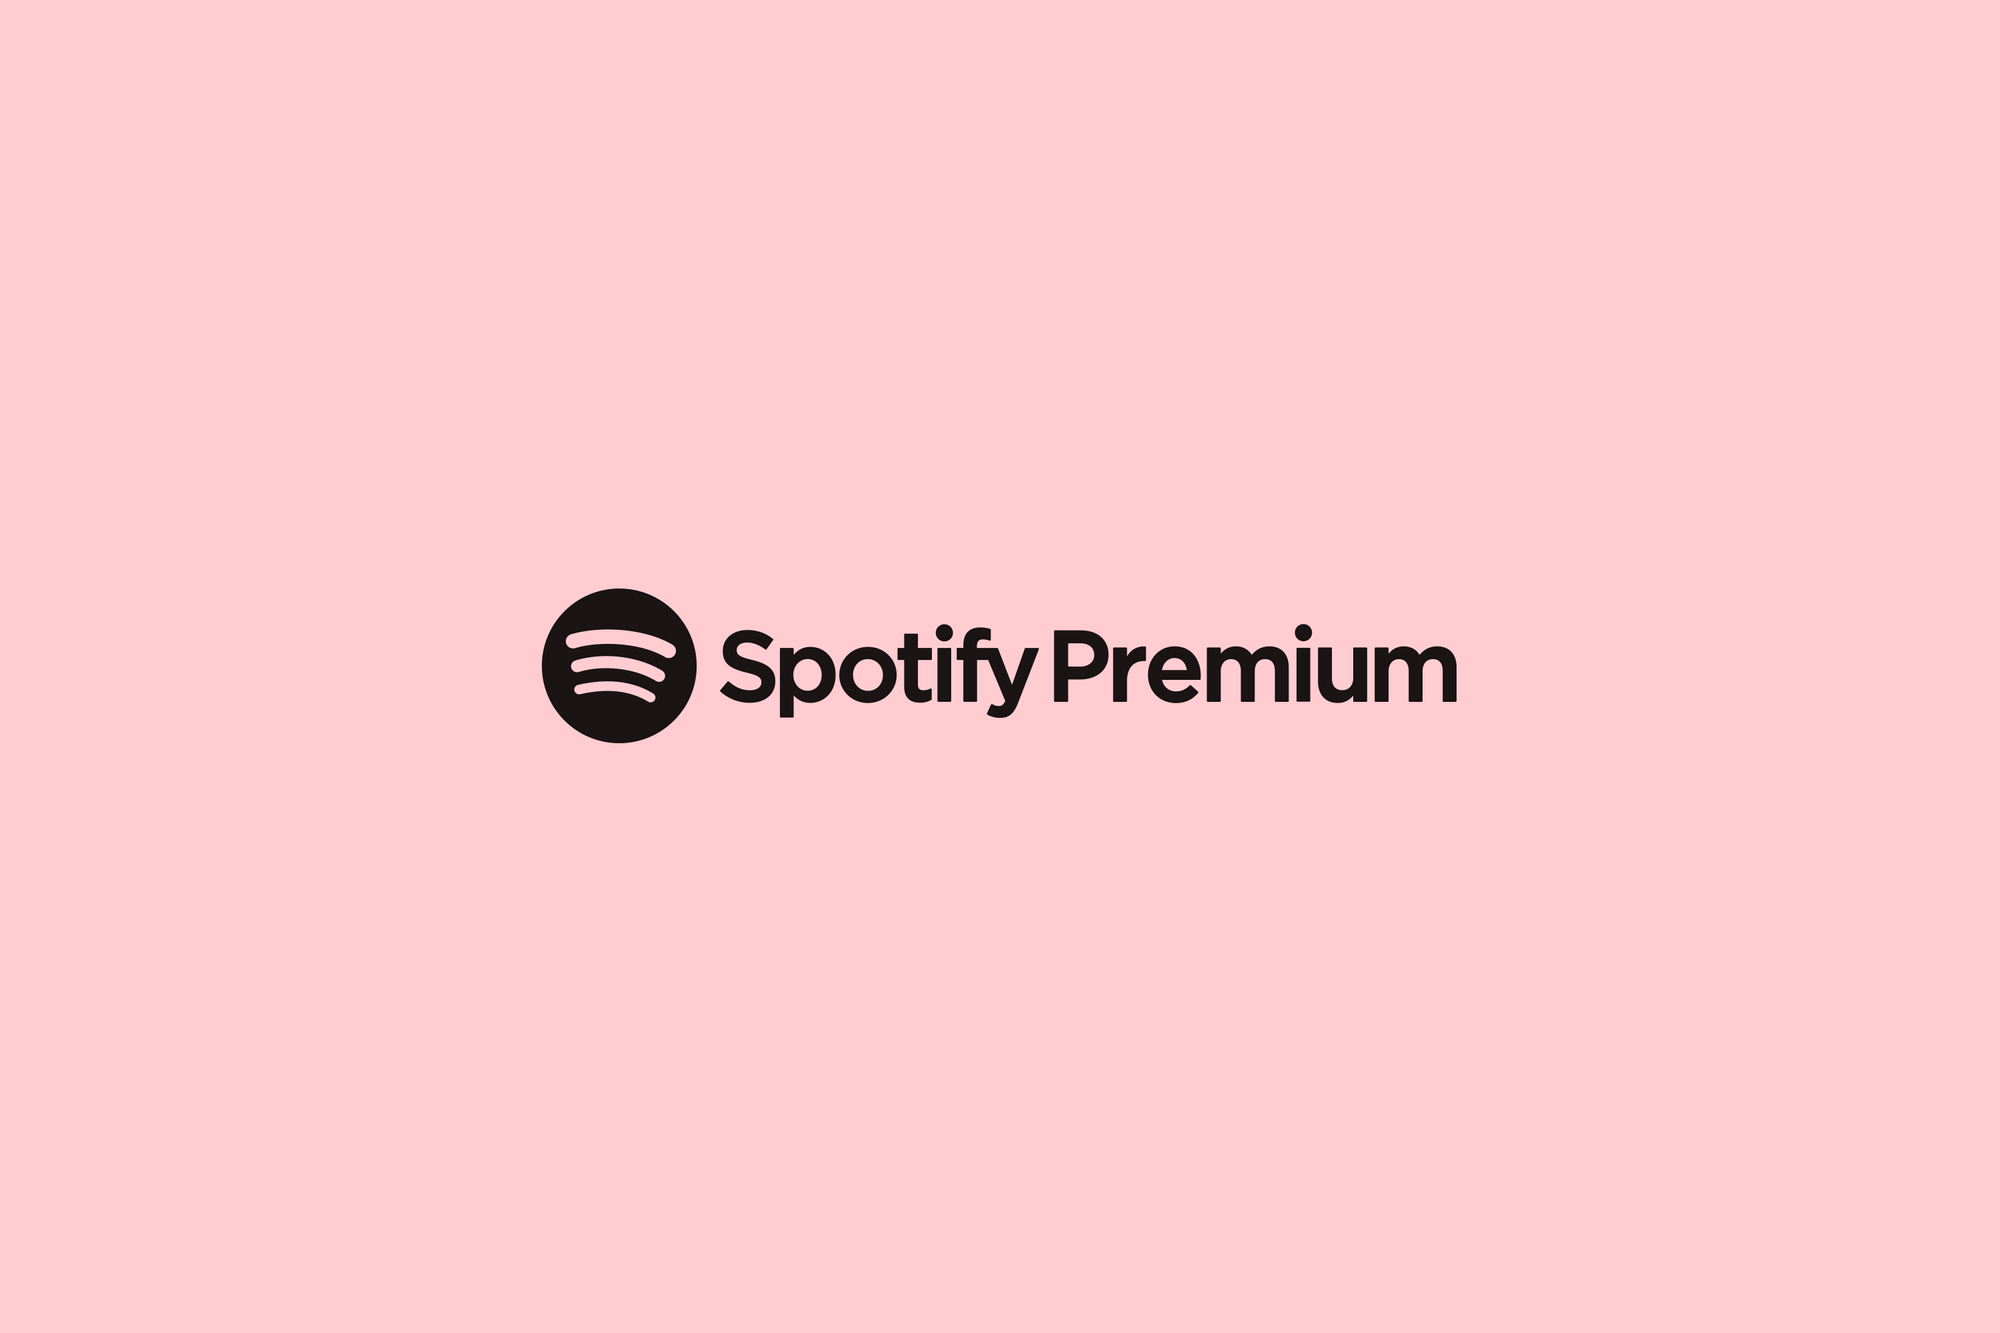 Spotify Premium v8.7.54.403 APK Crack Full Latest Version Free Download 2022